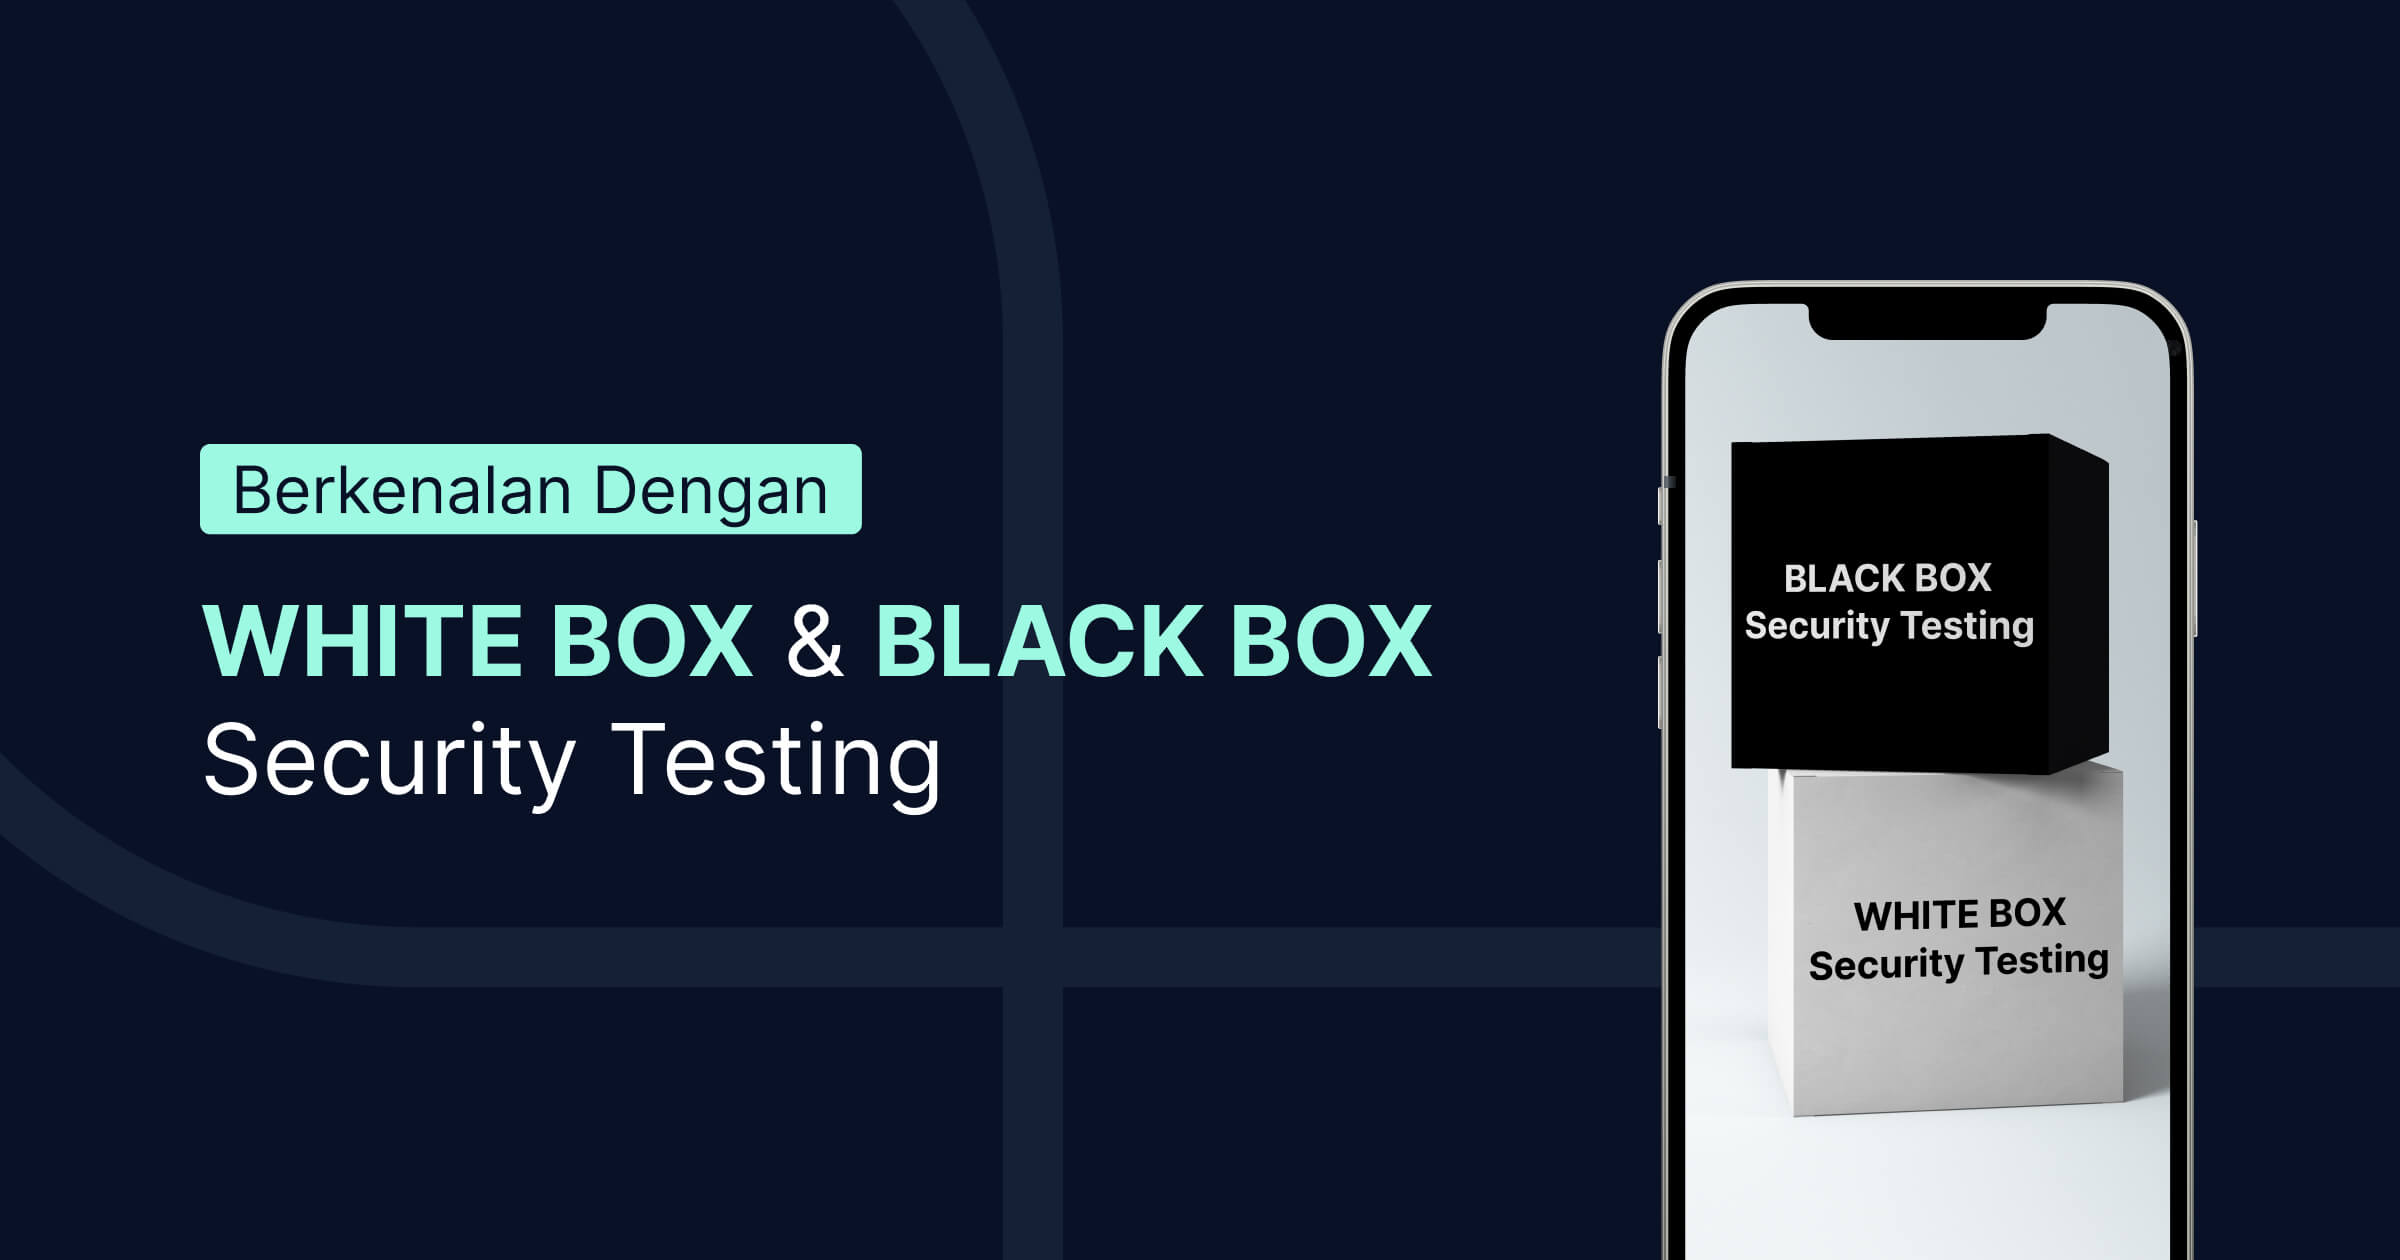 Berkenalan dengan white box dan black box security testing